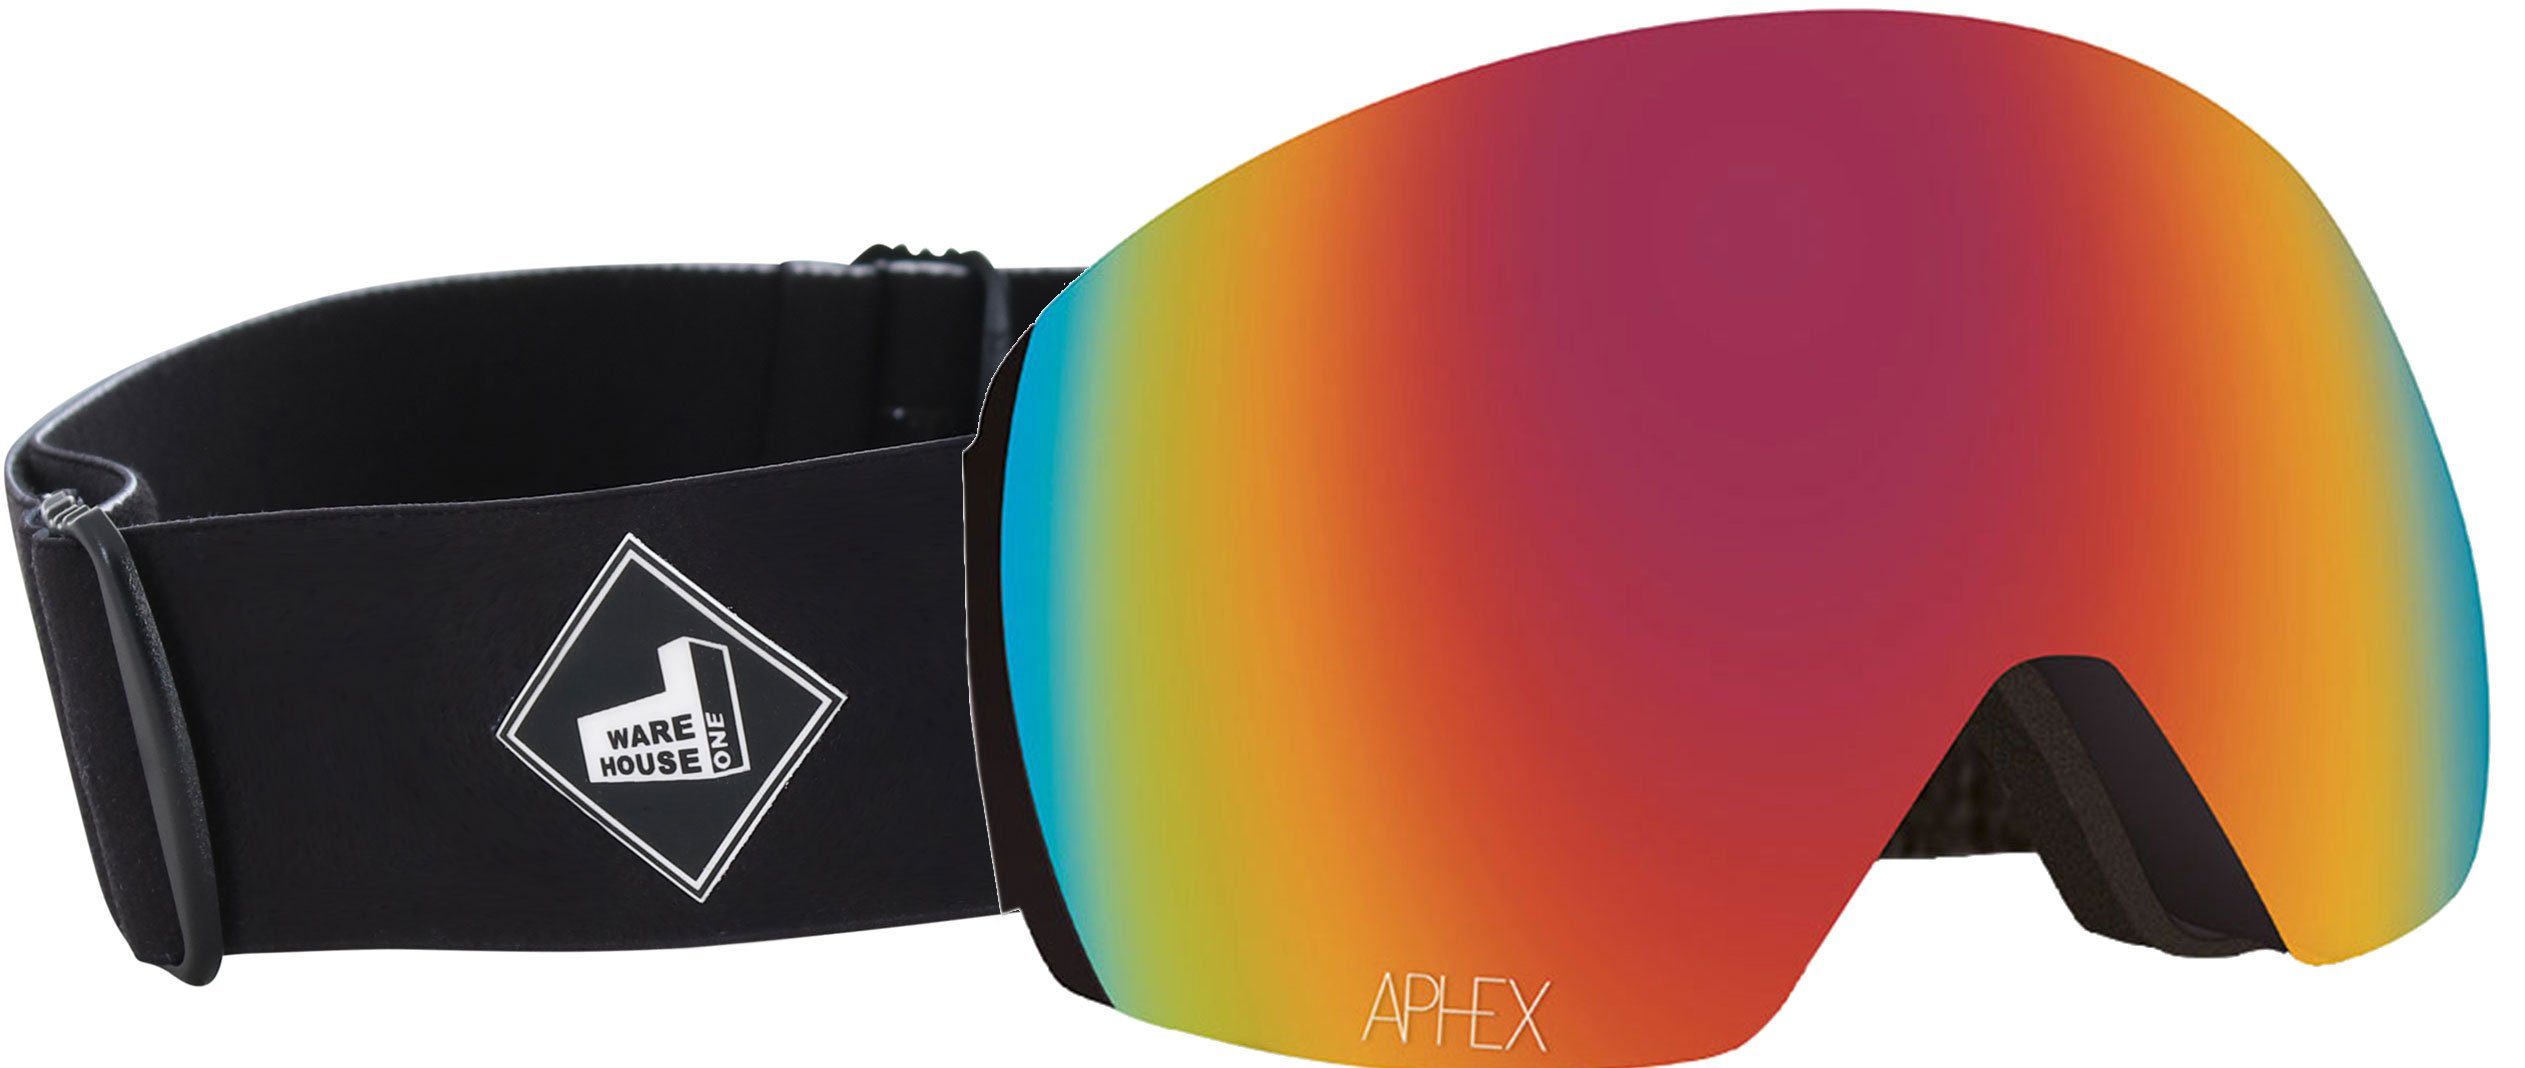 Aphex Snowboardbrille APHEX STYX Schneebrille black strap ONE EDITION Magnet THE Glas red 